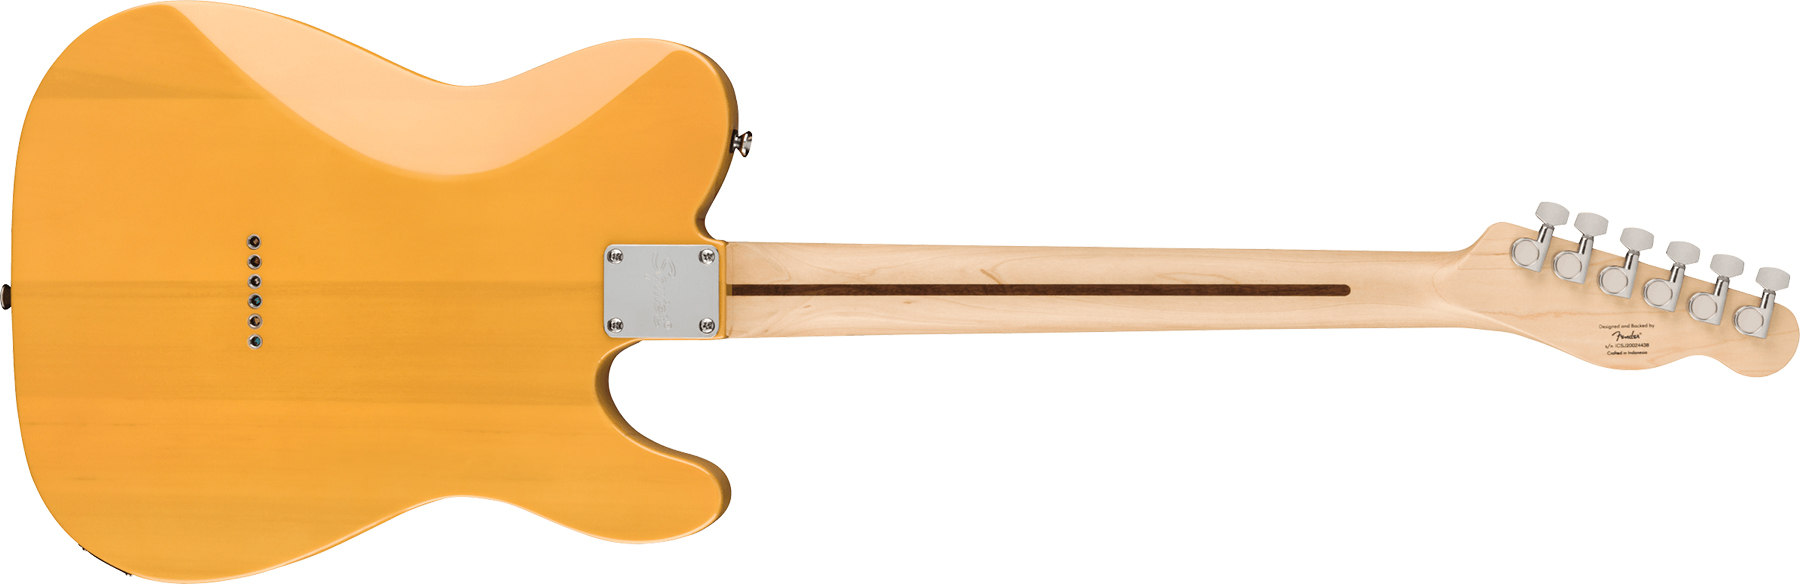 Squier Tele Affinity Gaucher 2021 2s Mn - Butterscotch Blonde - Left-handed electric guitar - Variation 1